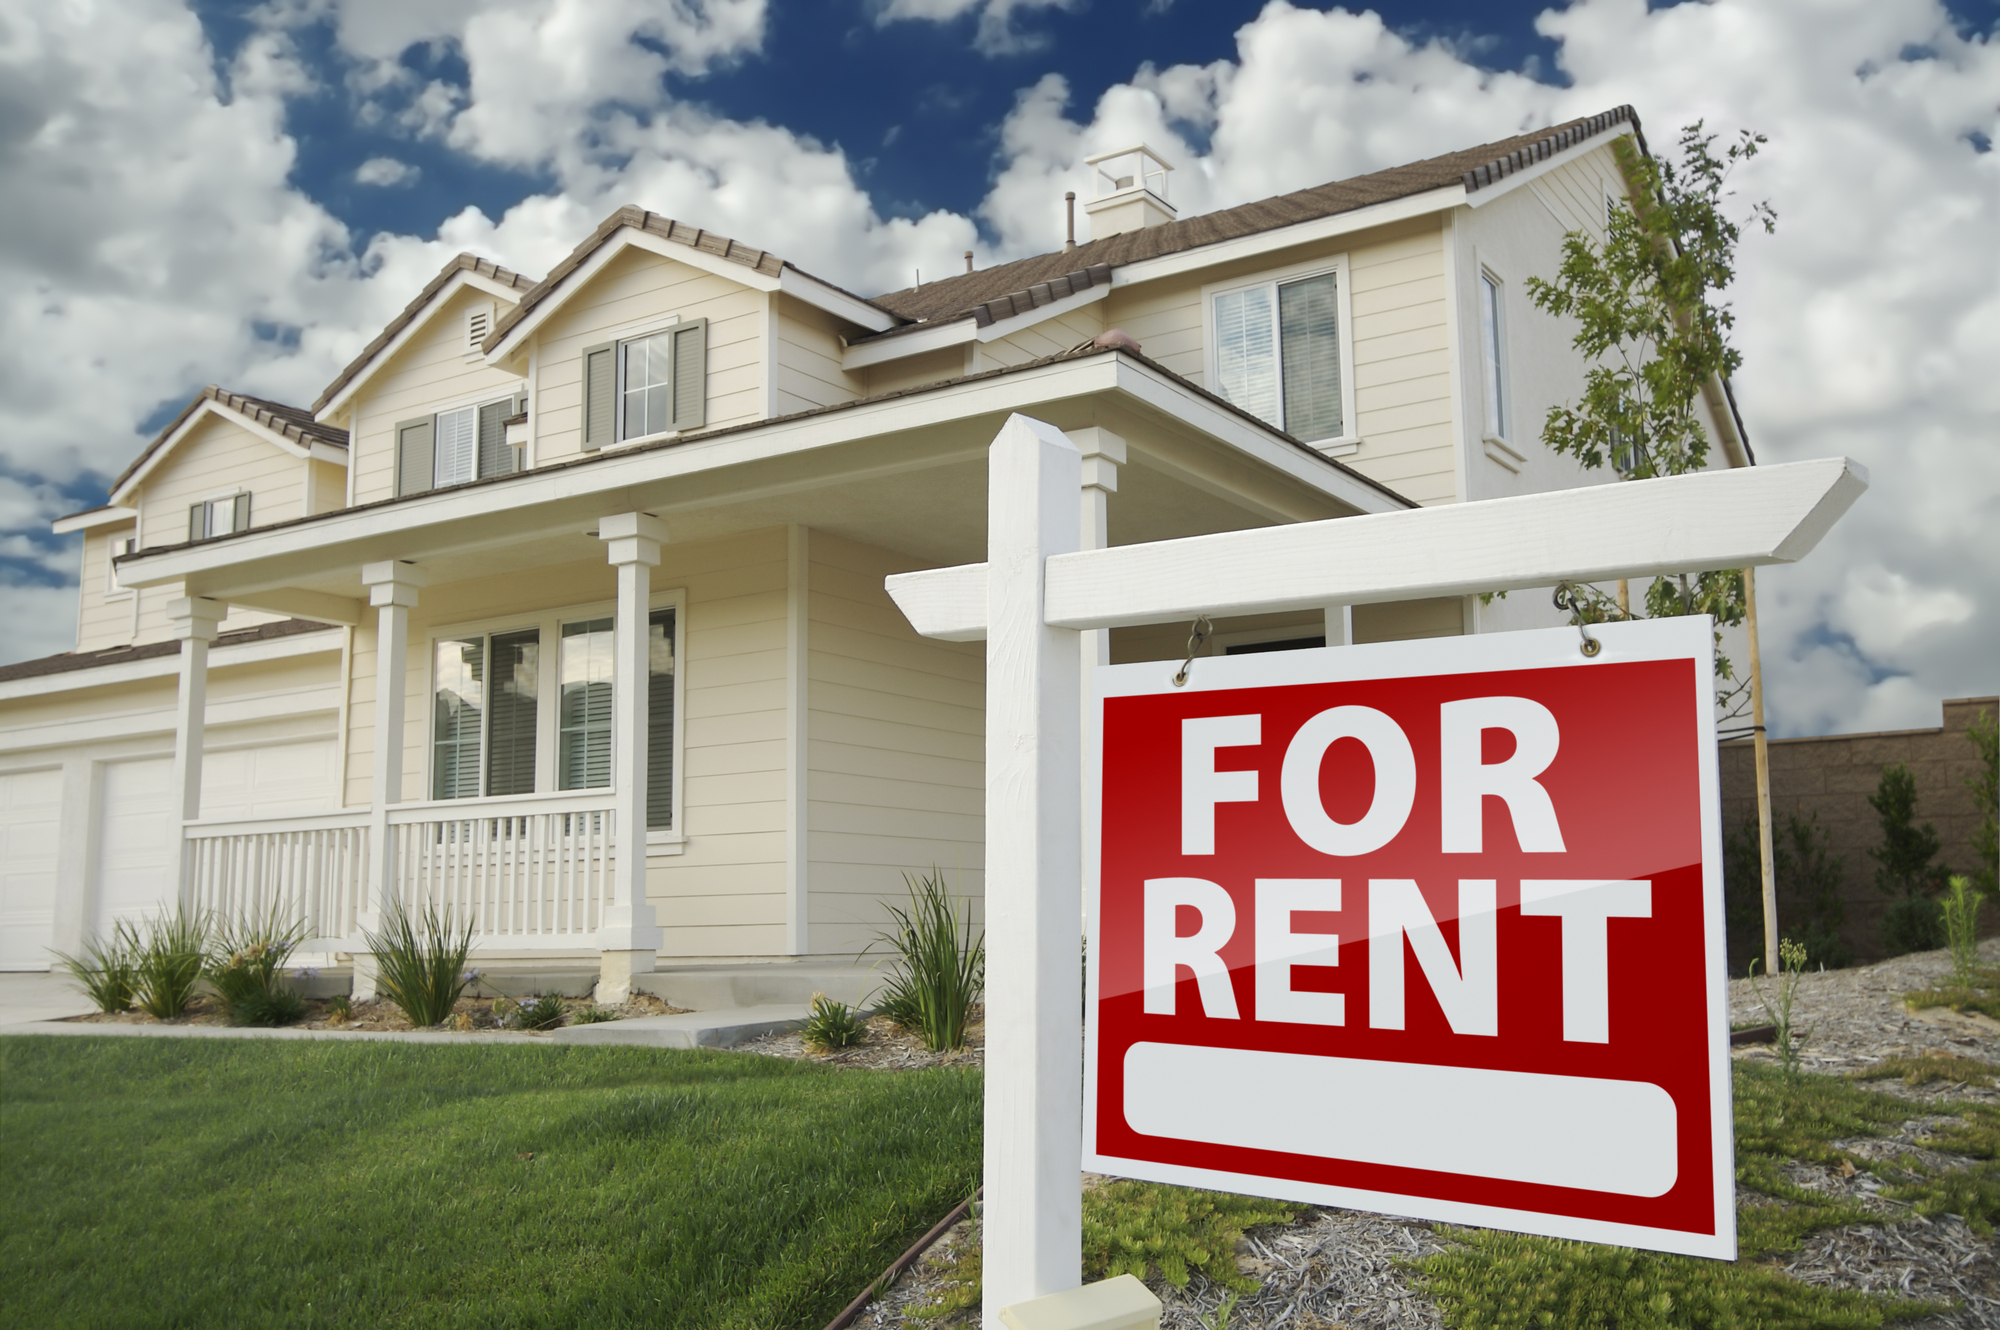 Residential Rental Property